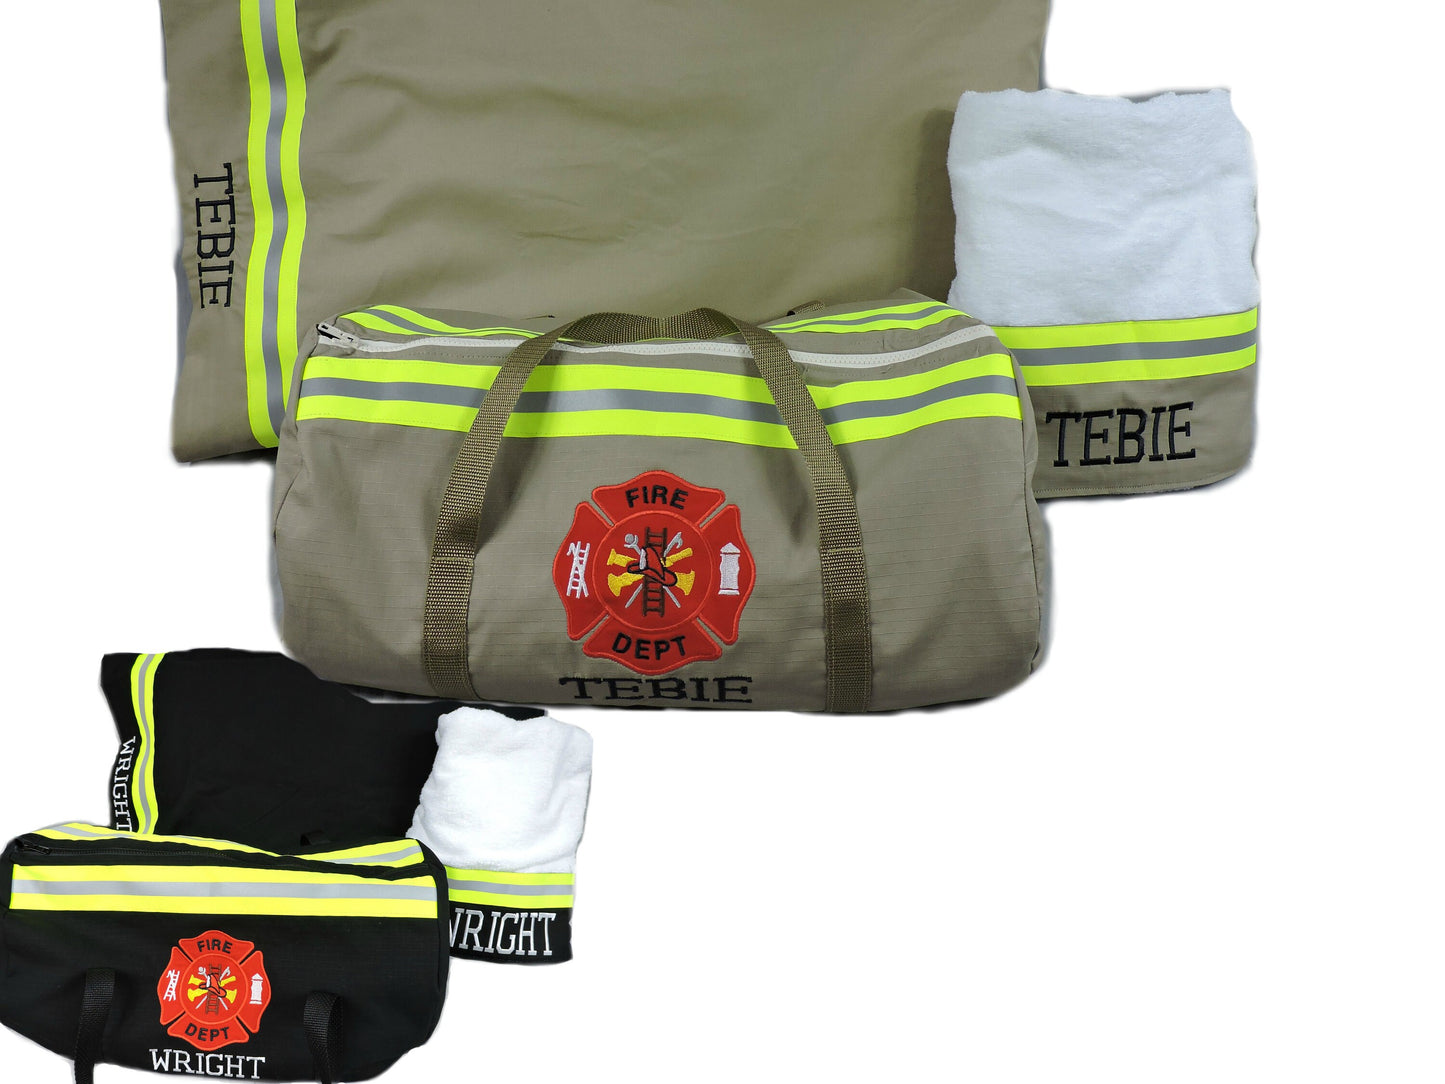 Firefighter Duffel bag, pillowcase and bath towel gift set